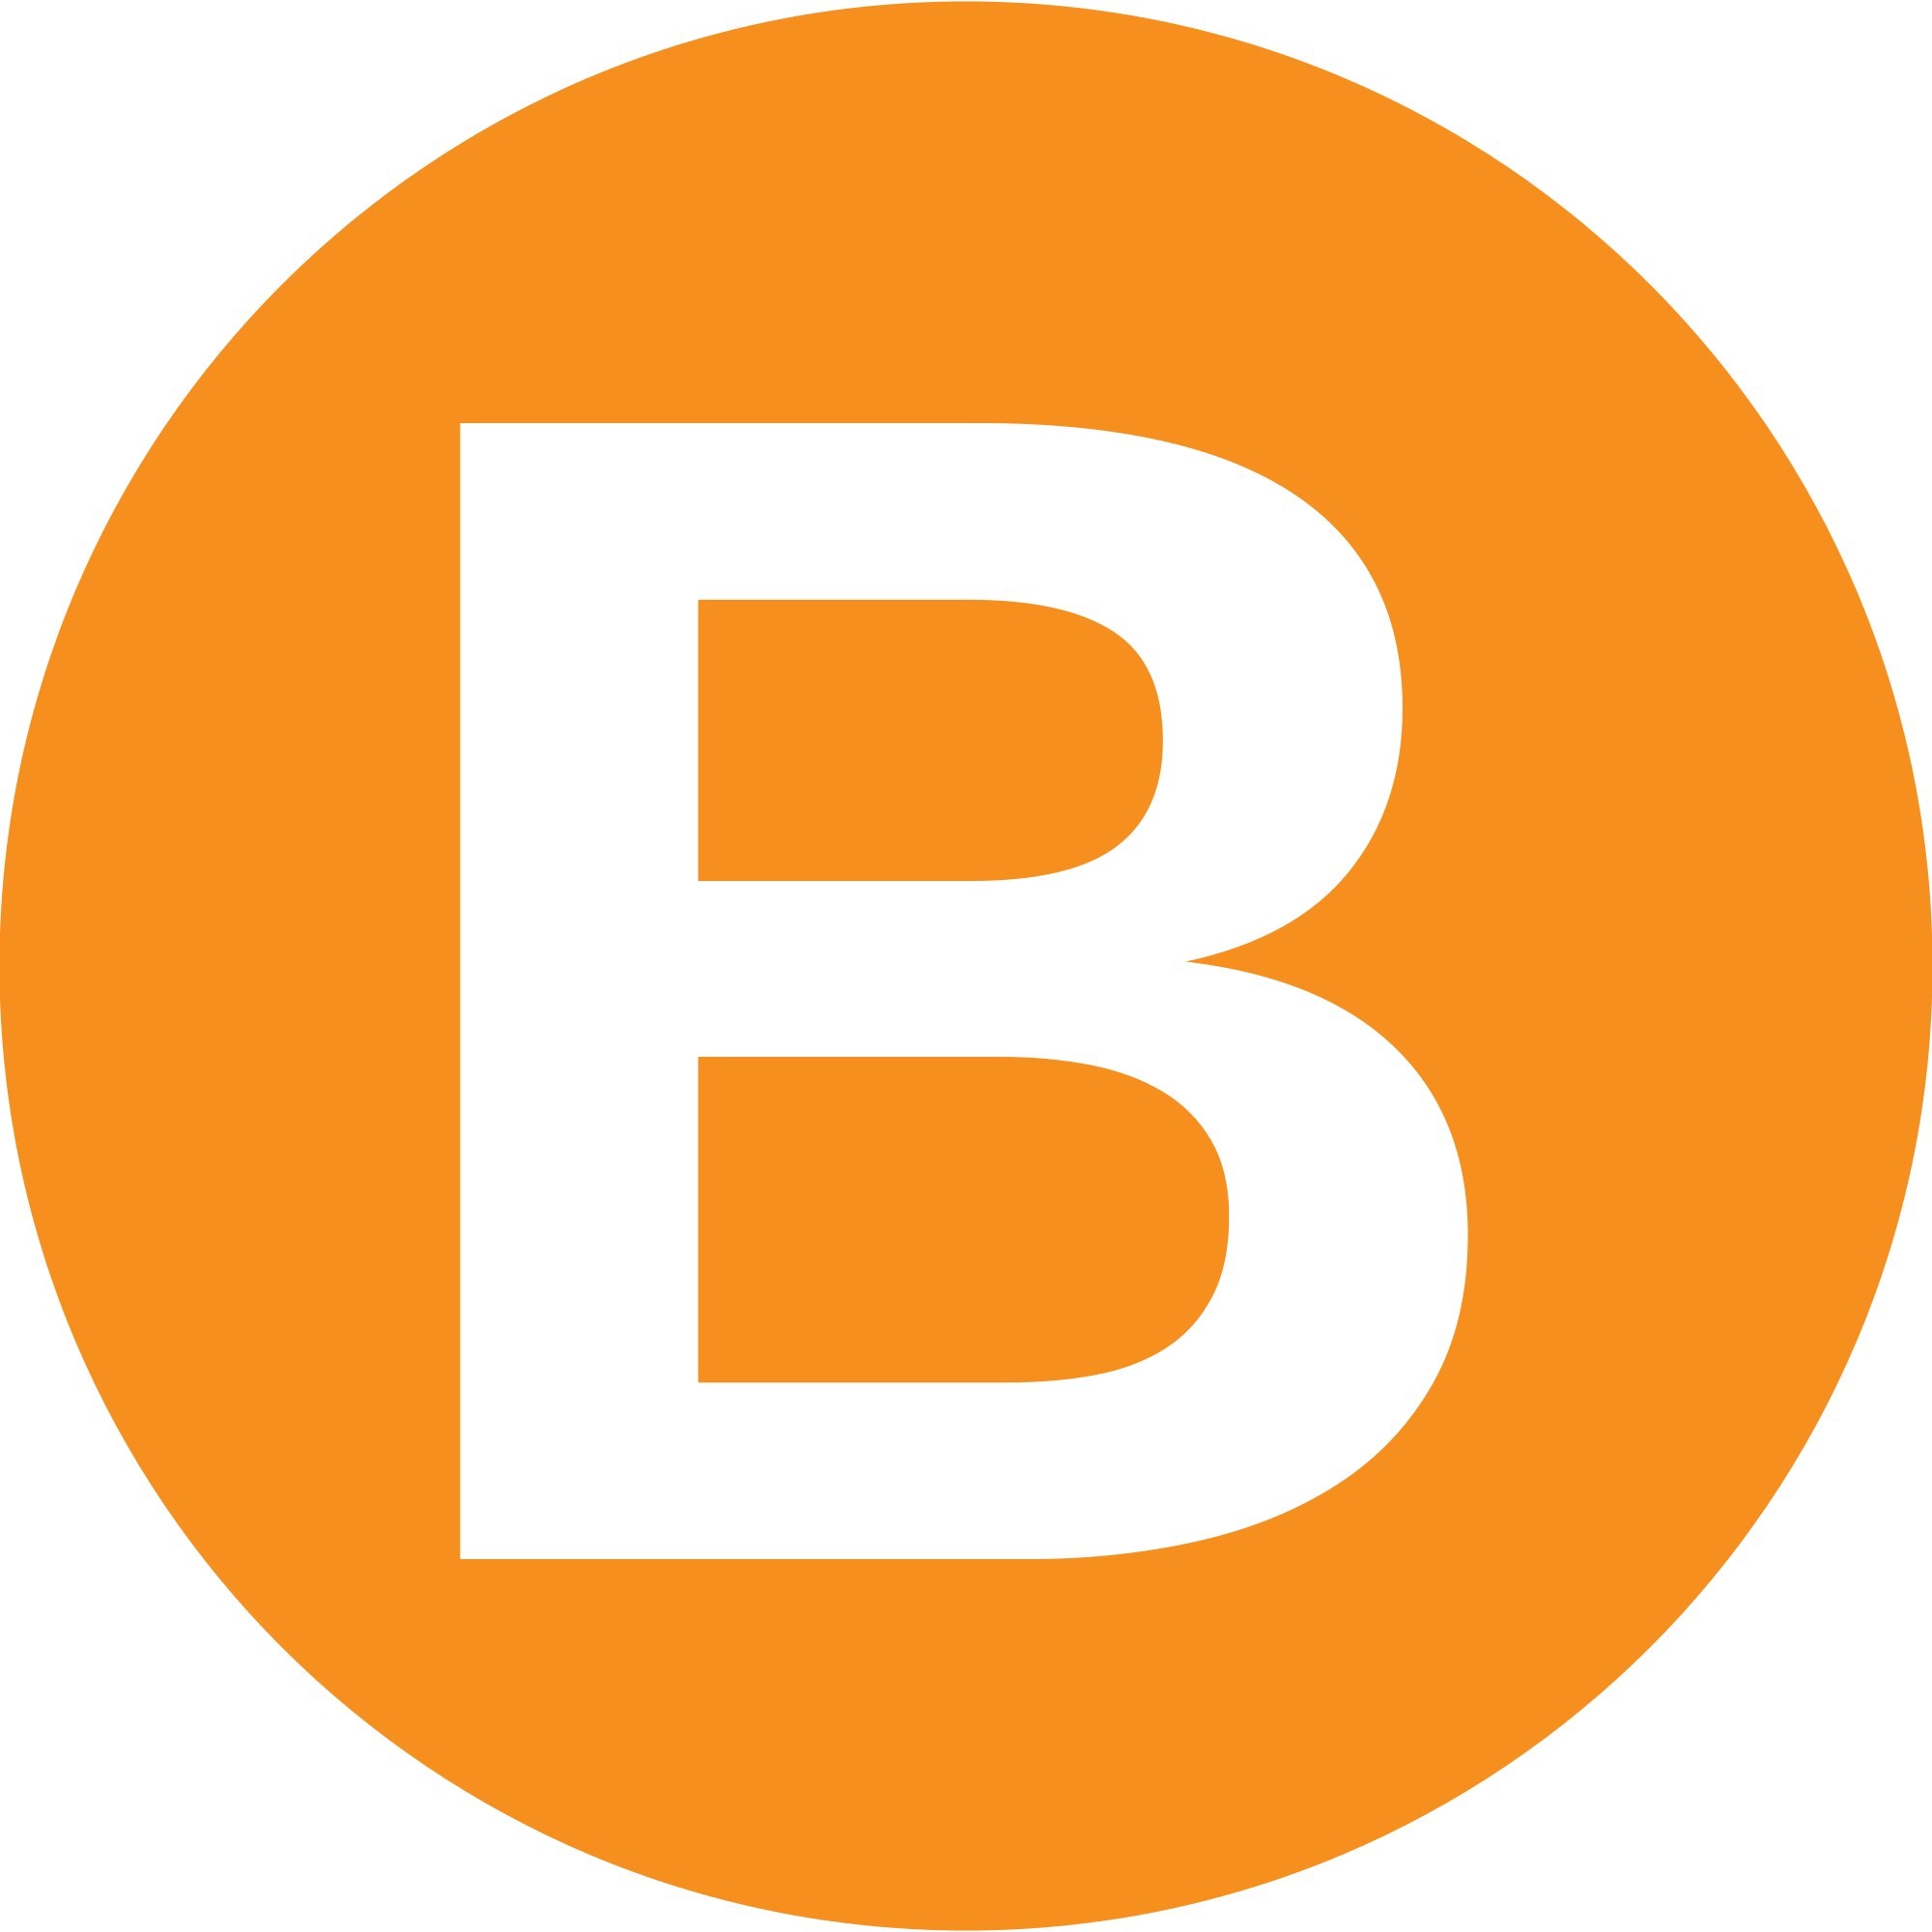 b & q carta da parati arancione,arancia,giallo,font,clipart,linea